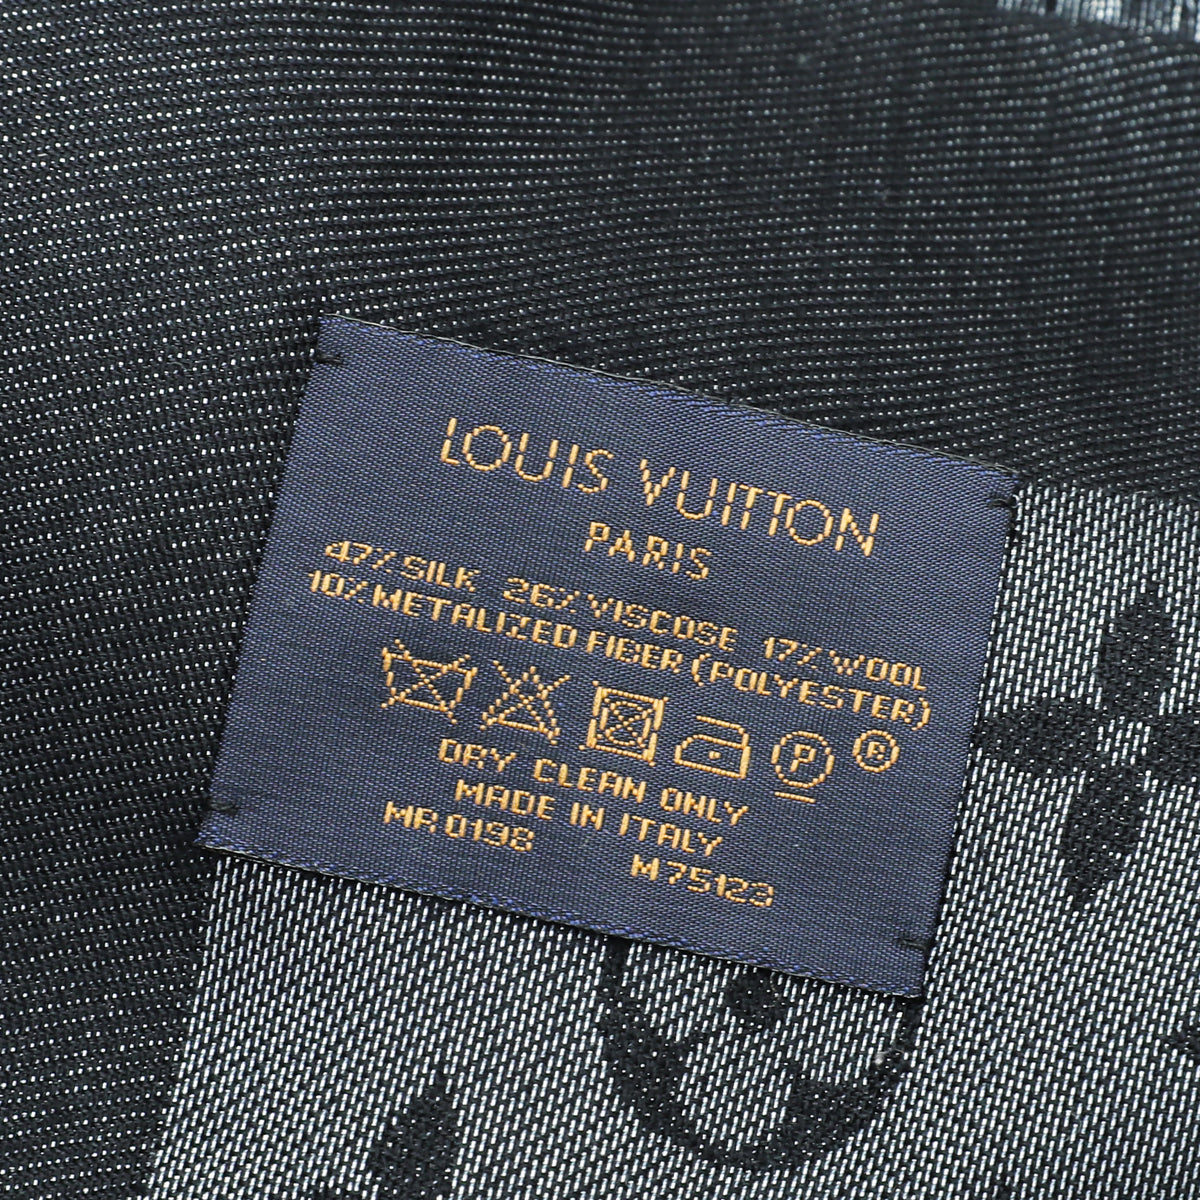 Louis Vuitton Shawl 